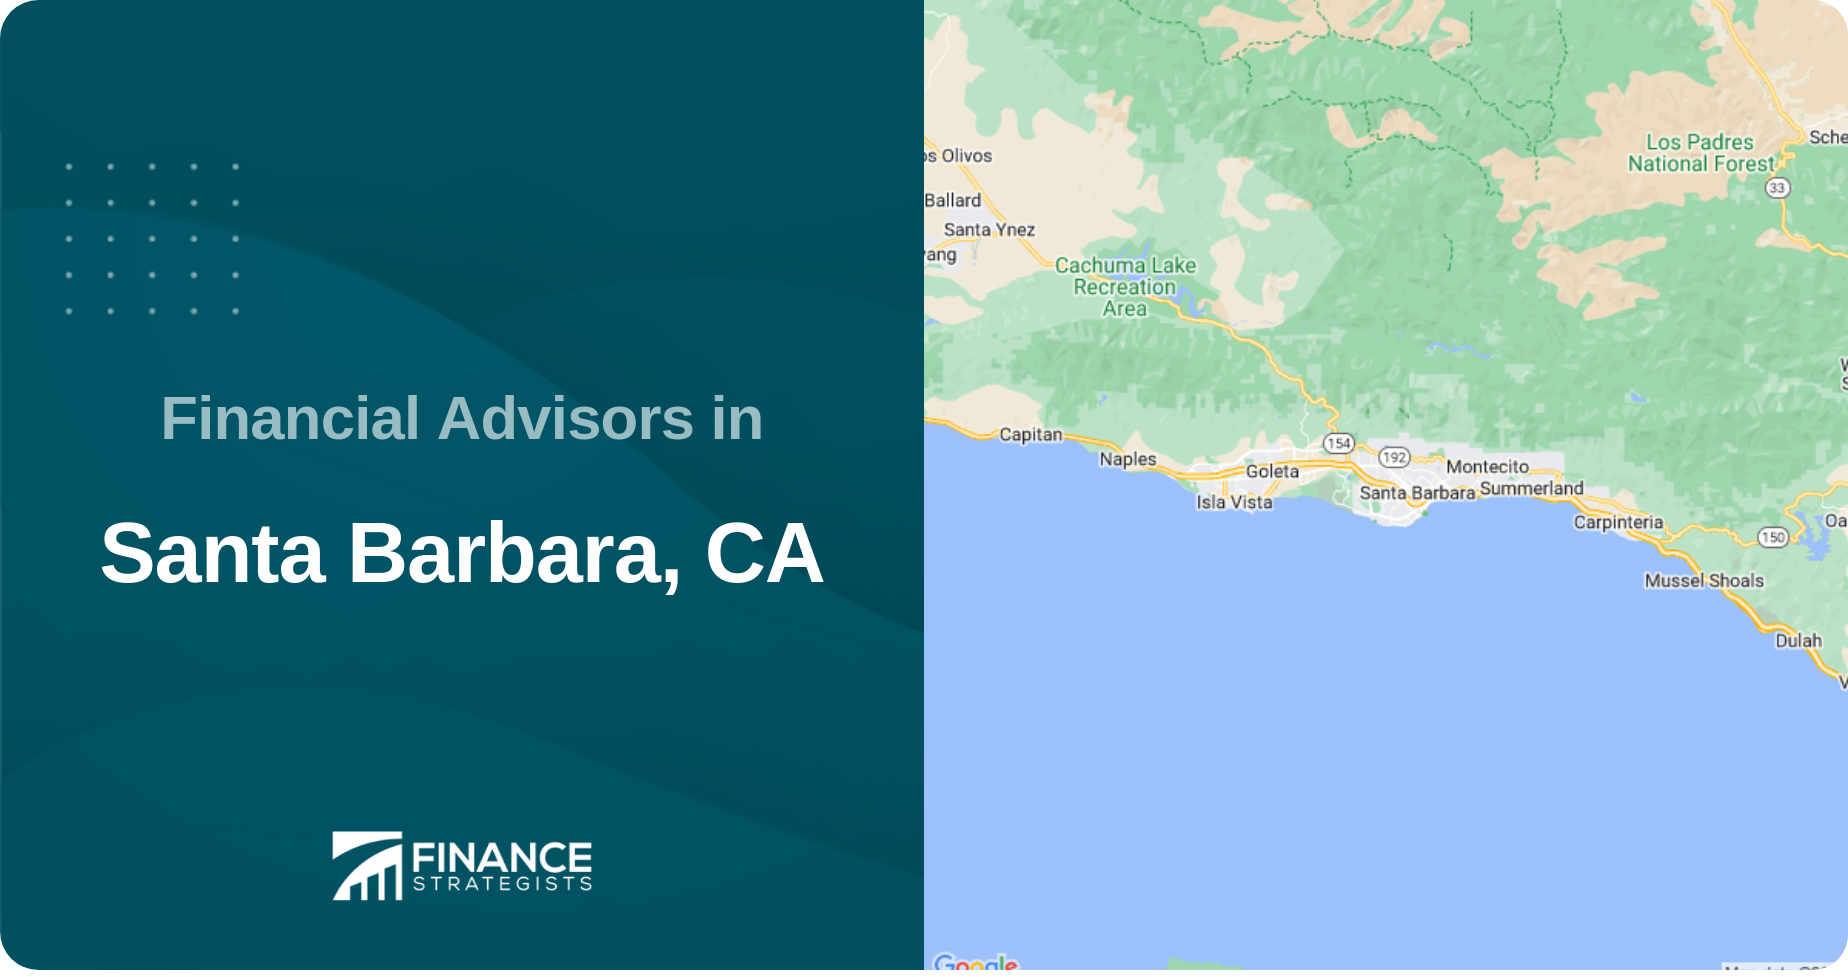 Financial Advisors in Santa Barbara, CA